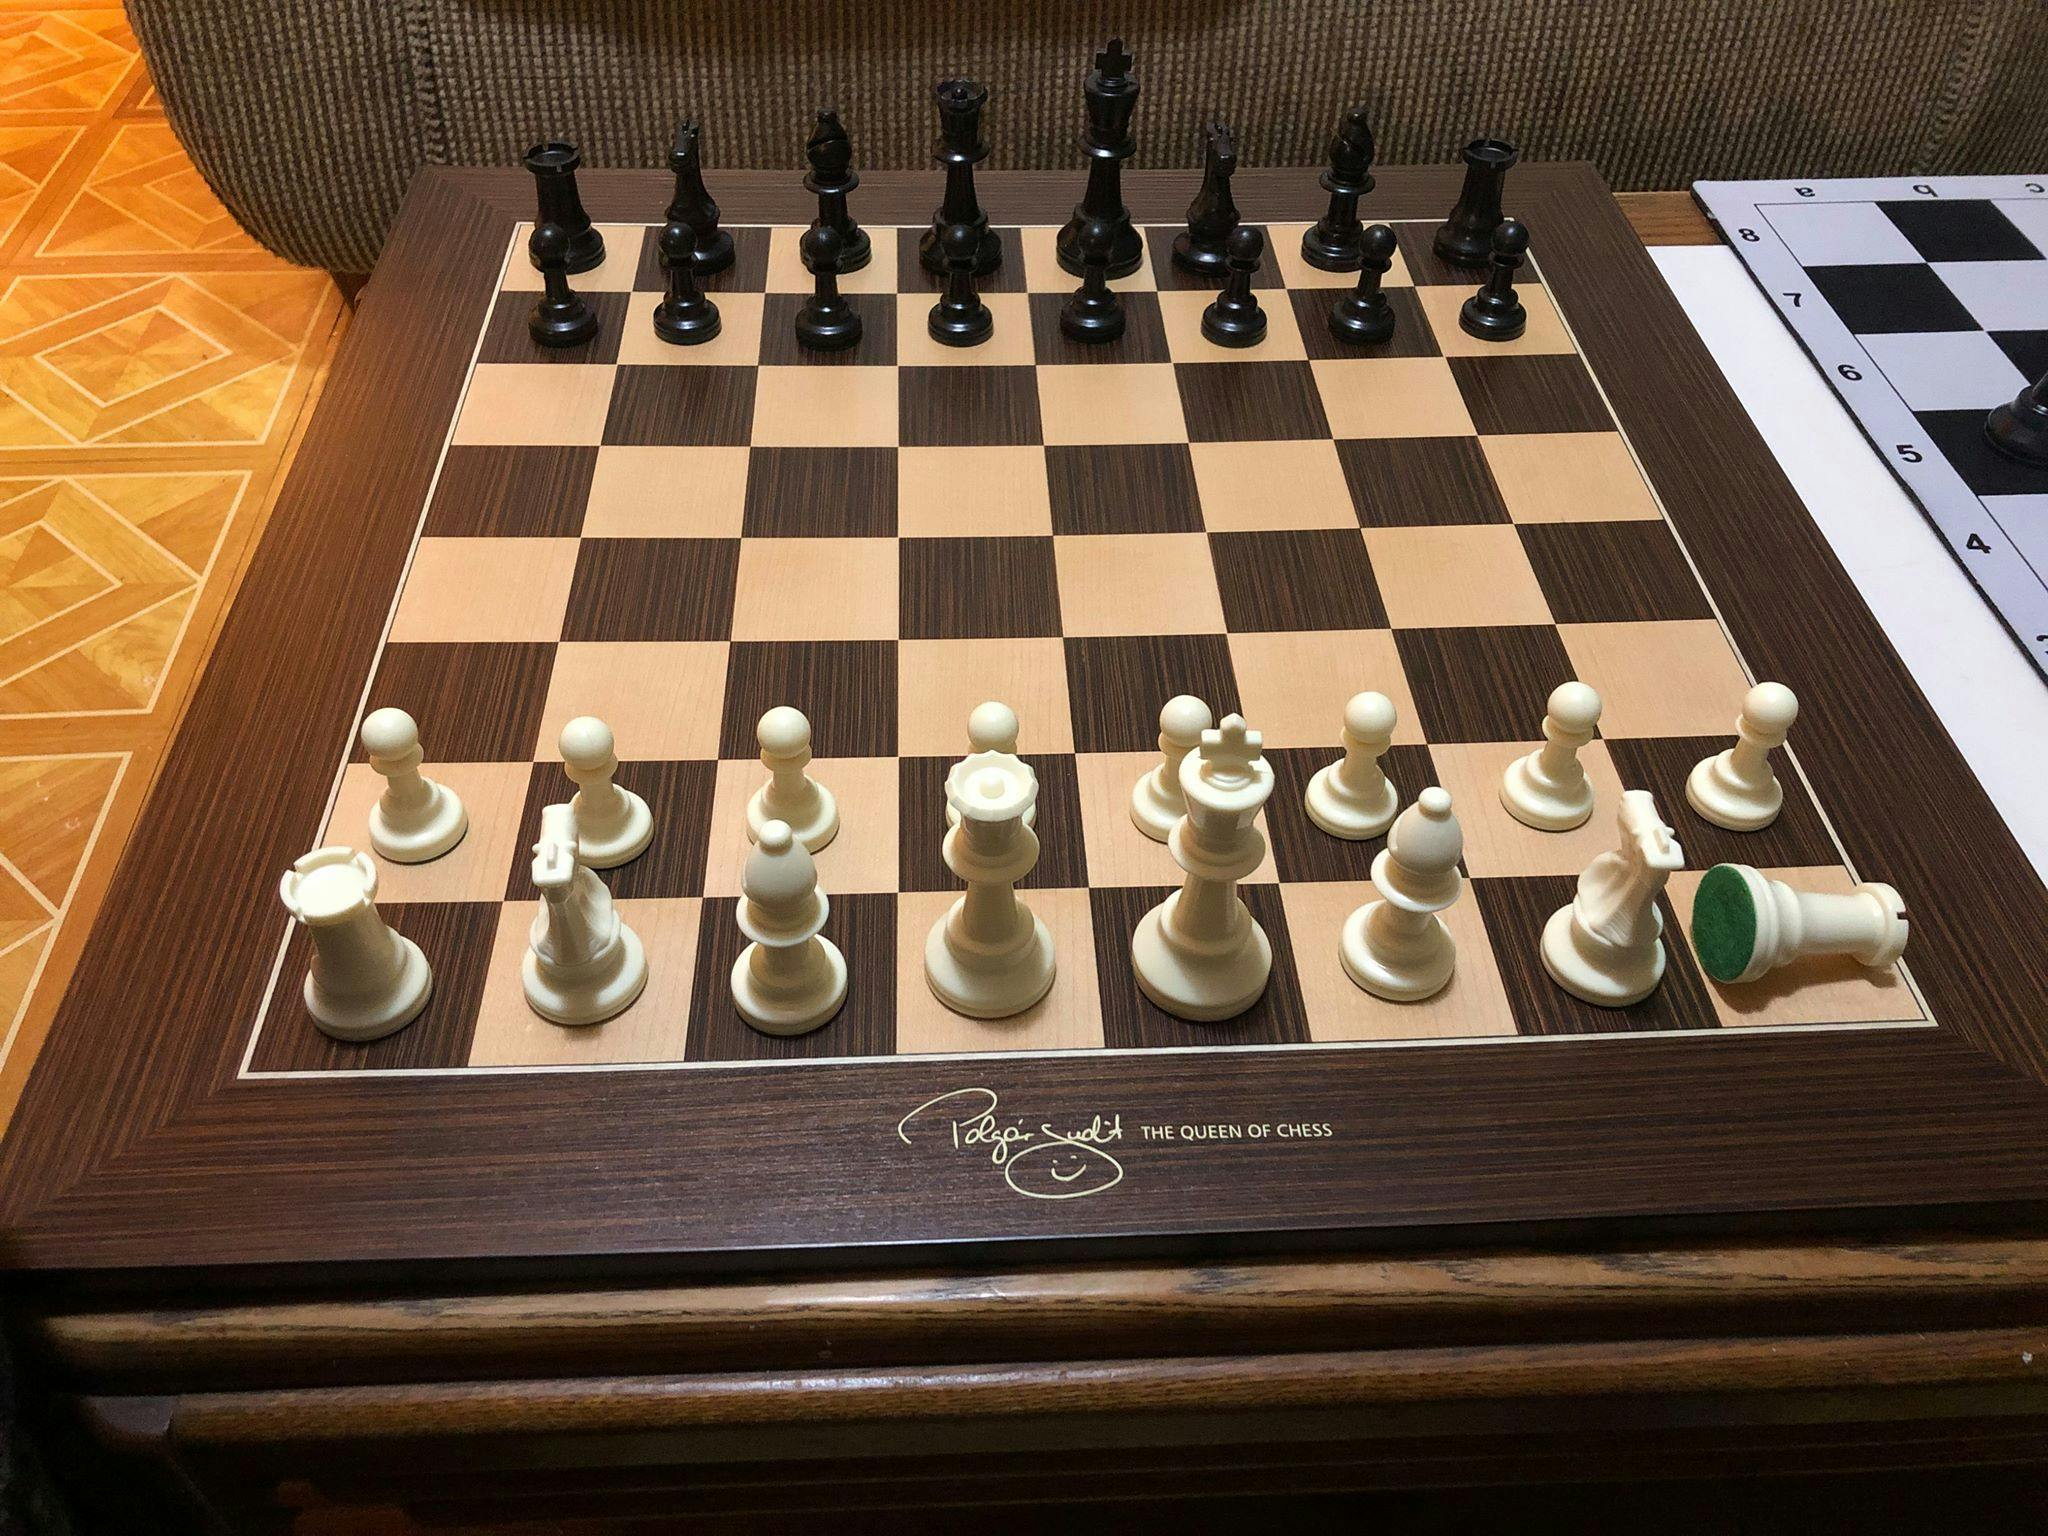 Judit Polgar: ''The infinite possibilities of a chessboard